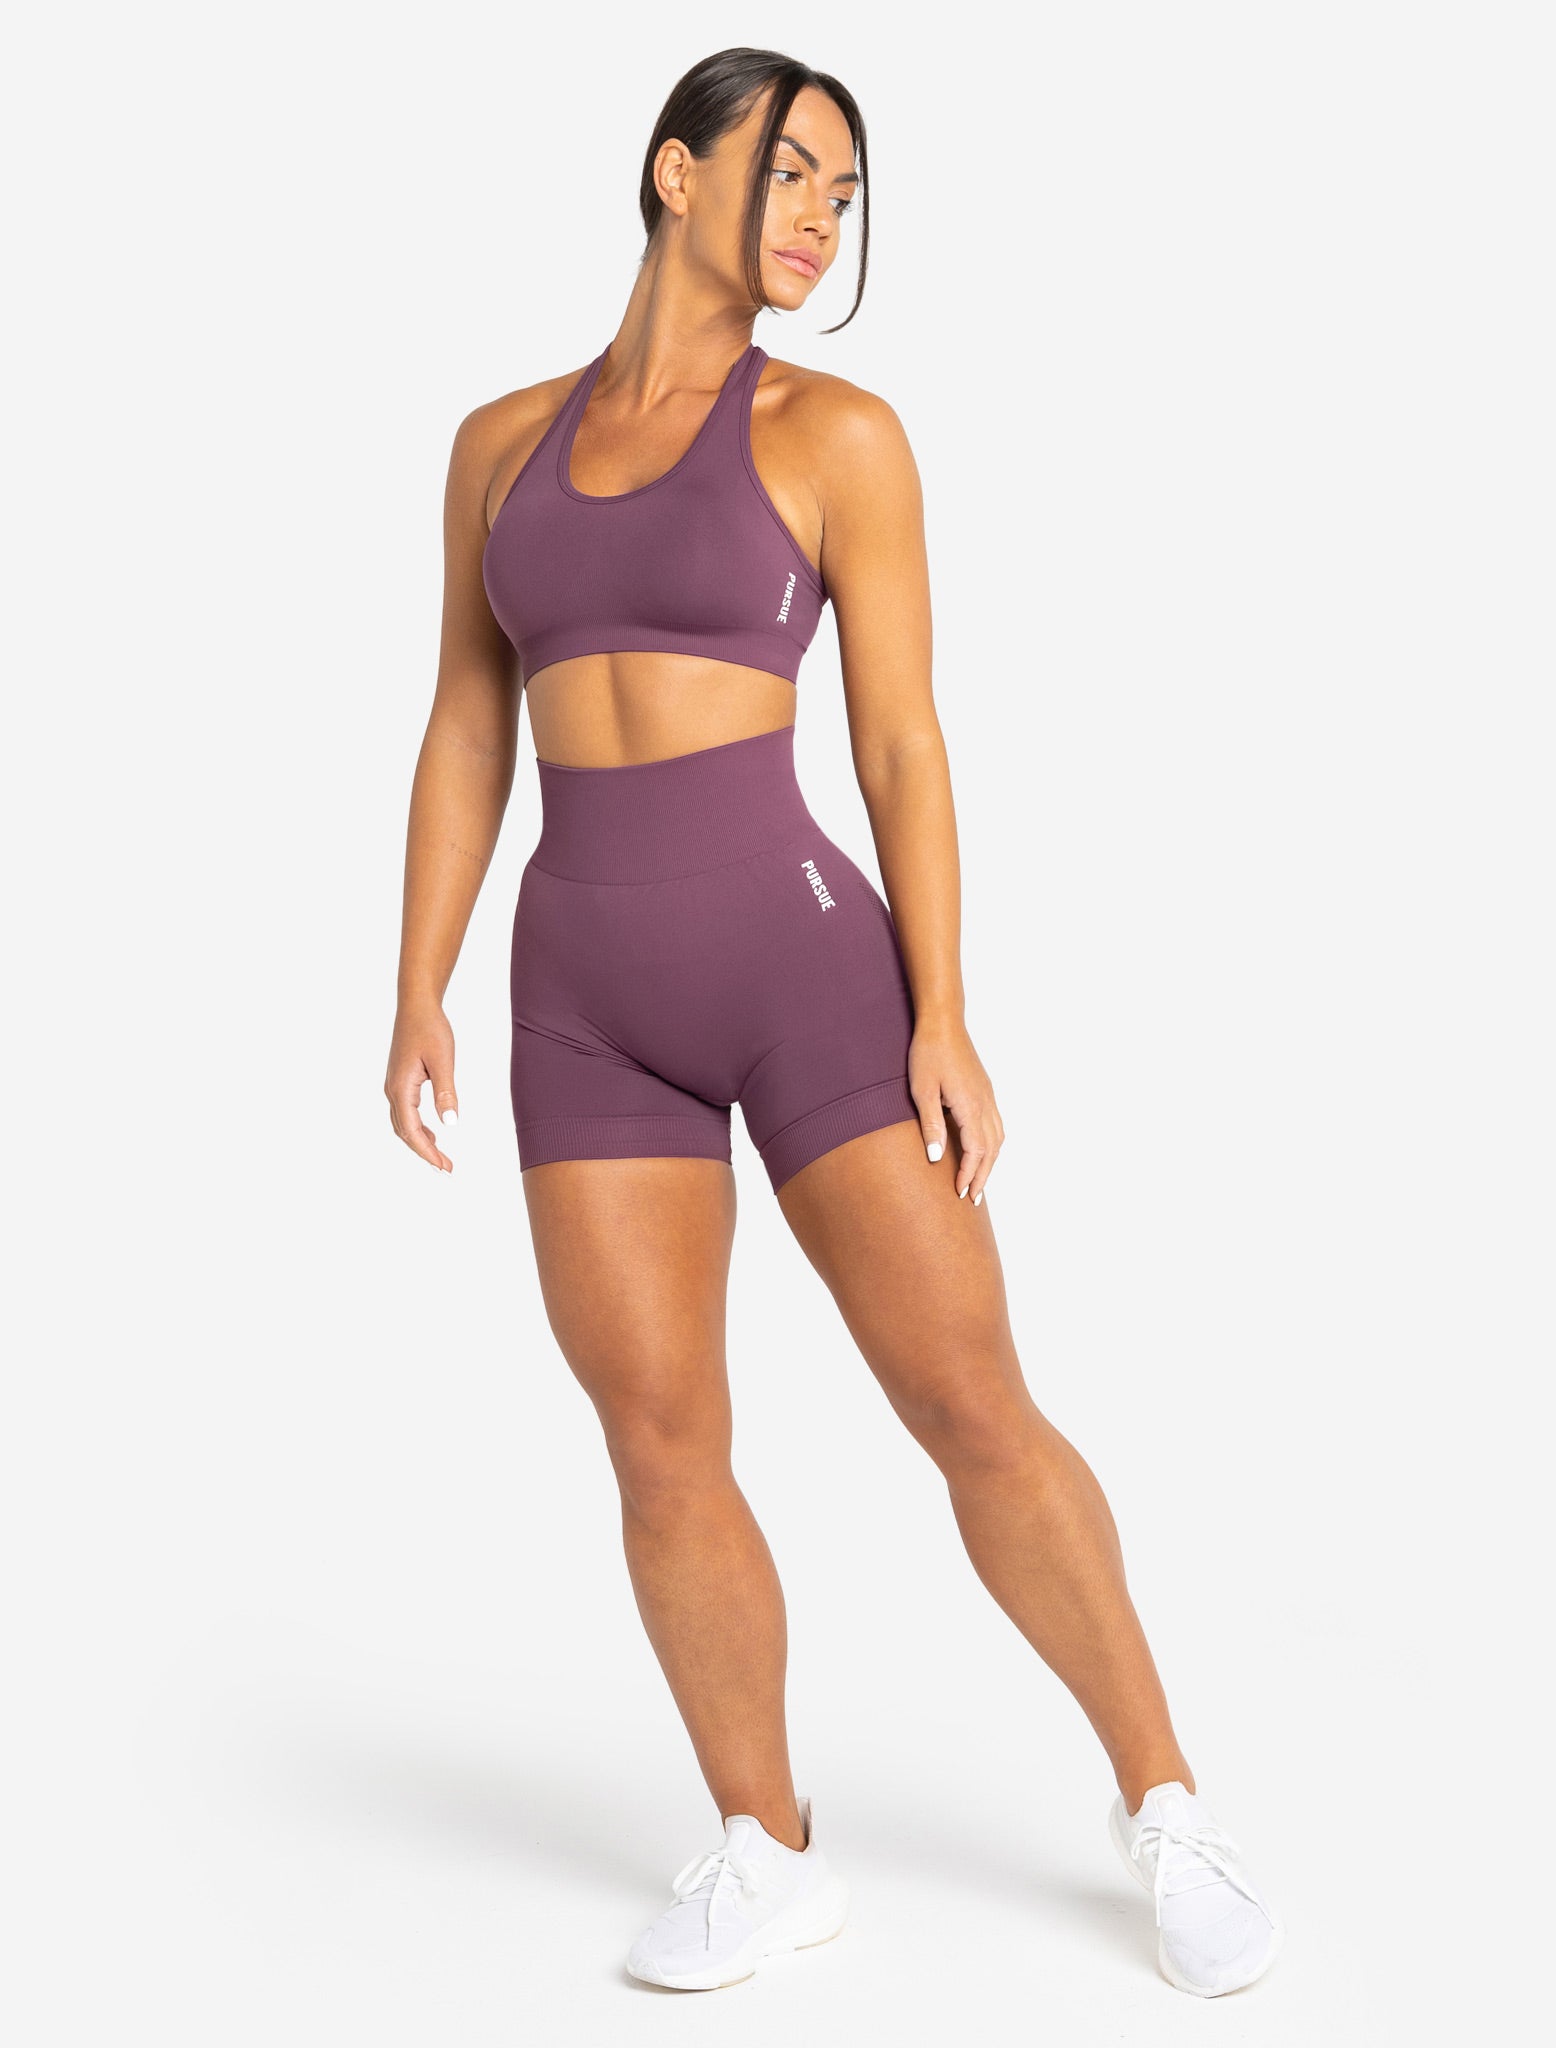 Women's Gym Shorts, Workout Shorts